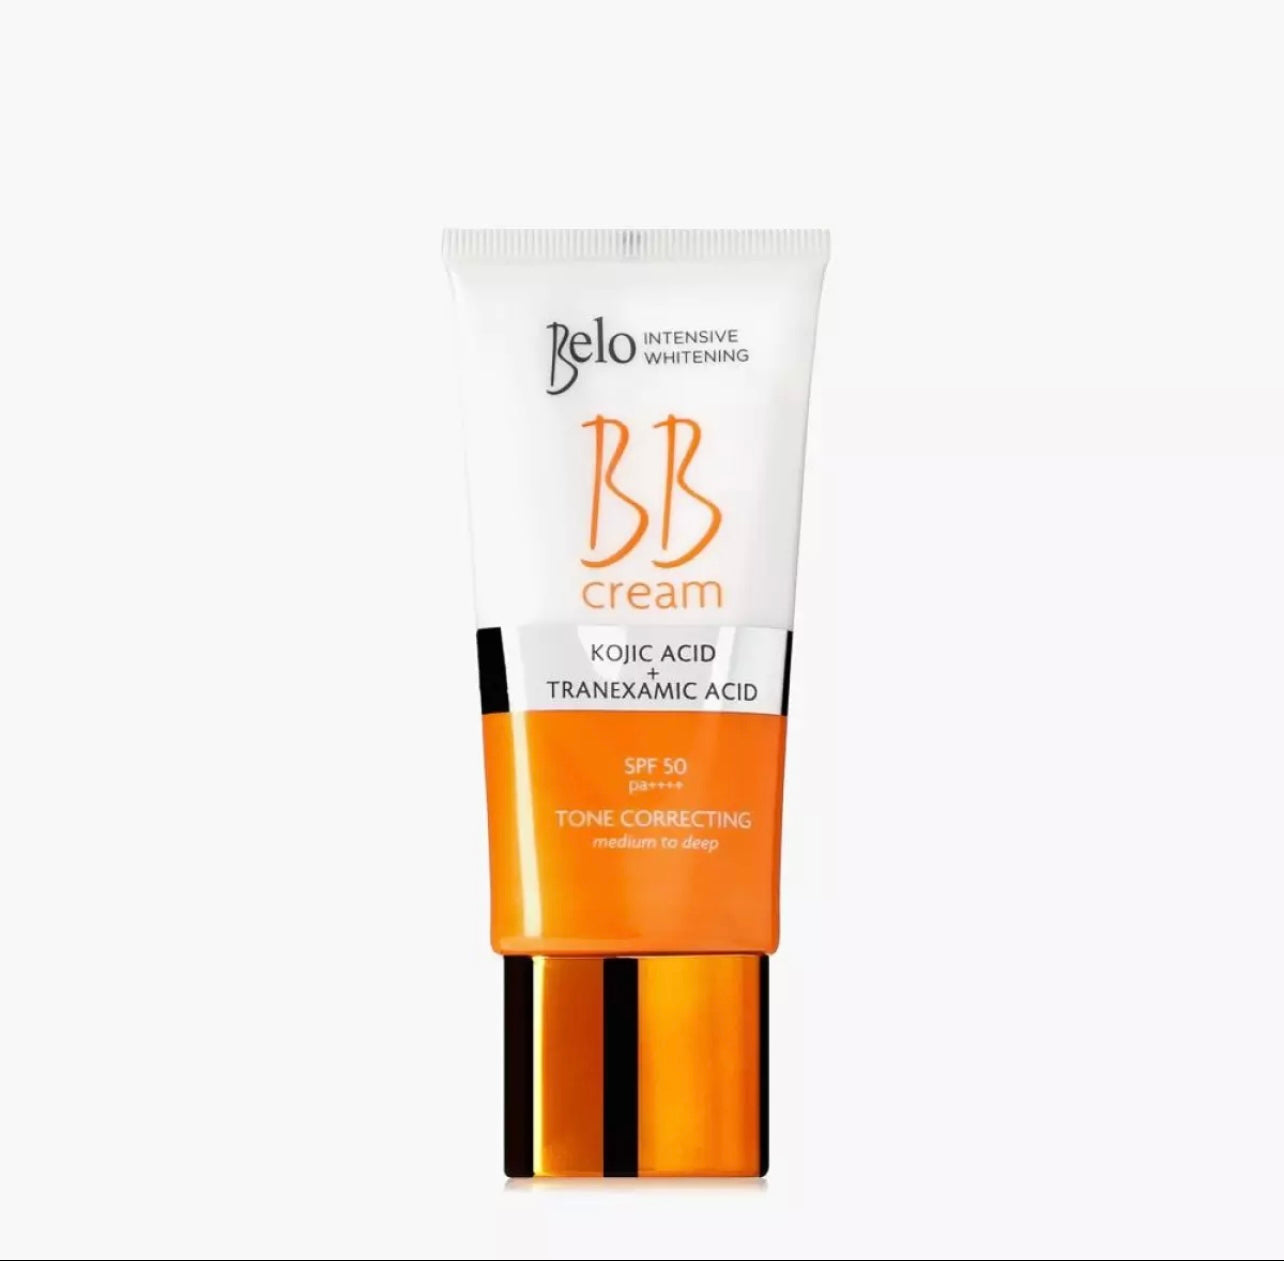 Belo Intensive  BB Cream - Kojic Acid  - SPF 50 - 50ml